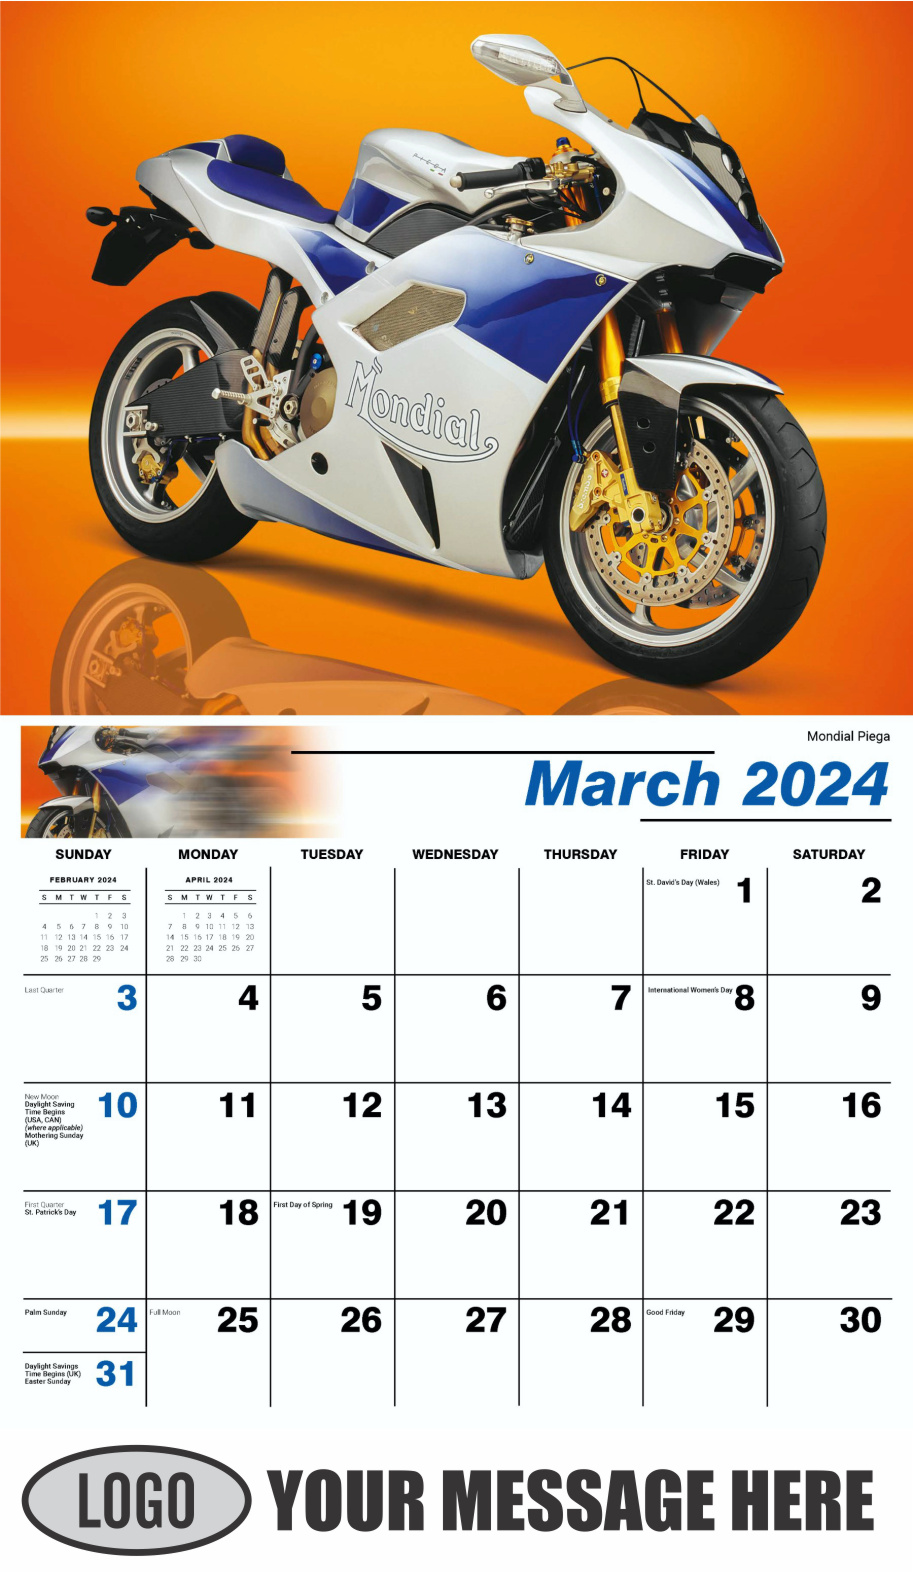 Motorcycle Mania 2024 Automotve Business Advertising Wall Calendar - March